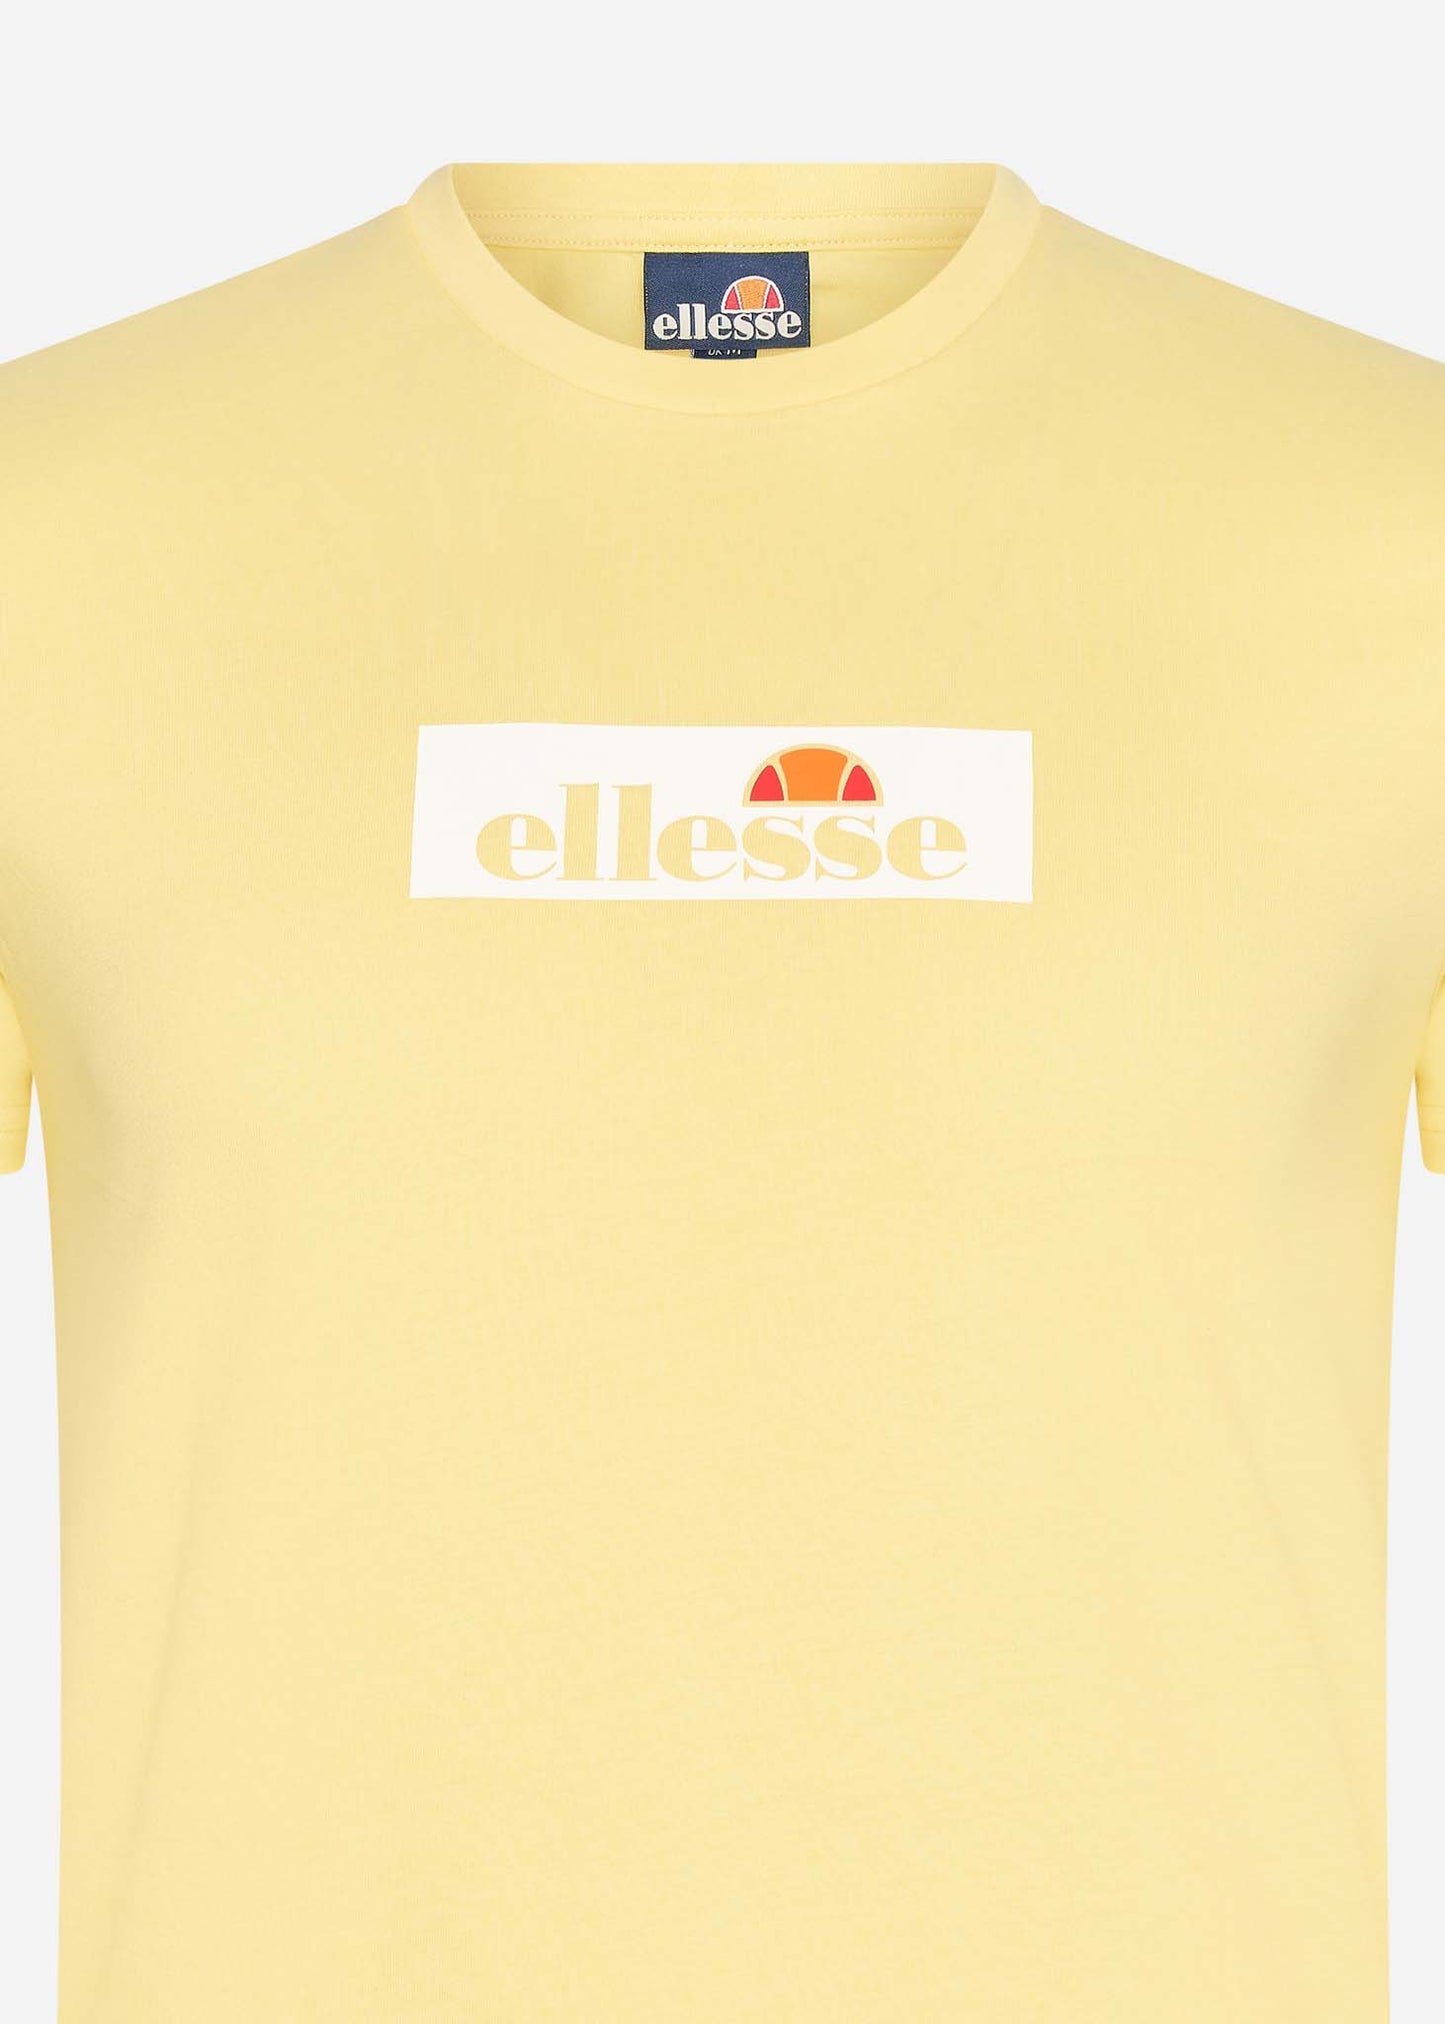 Tilanis tee - light yellow - Ellesse